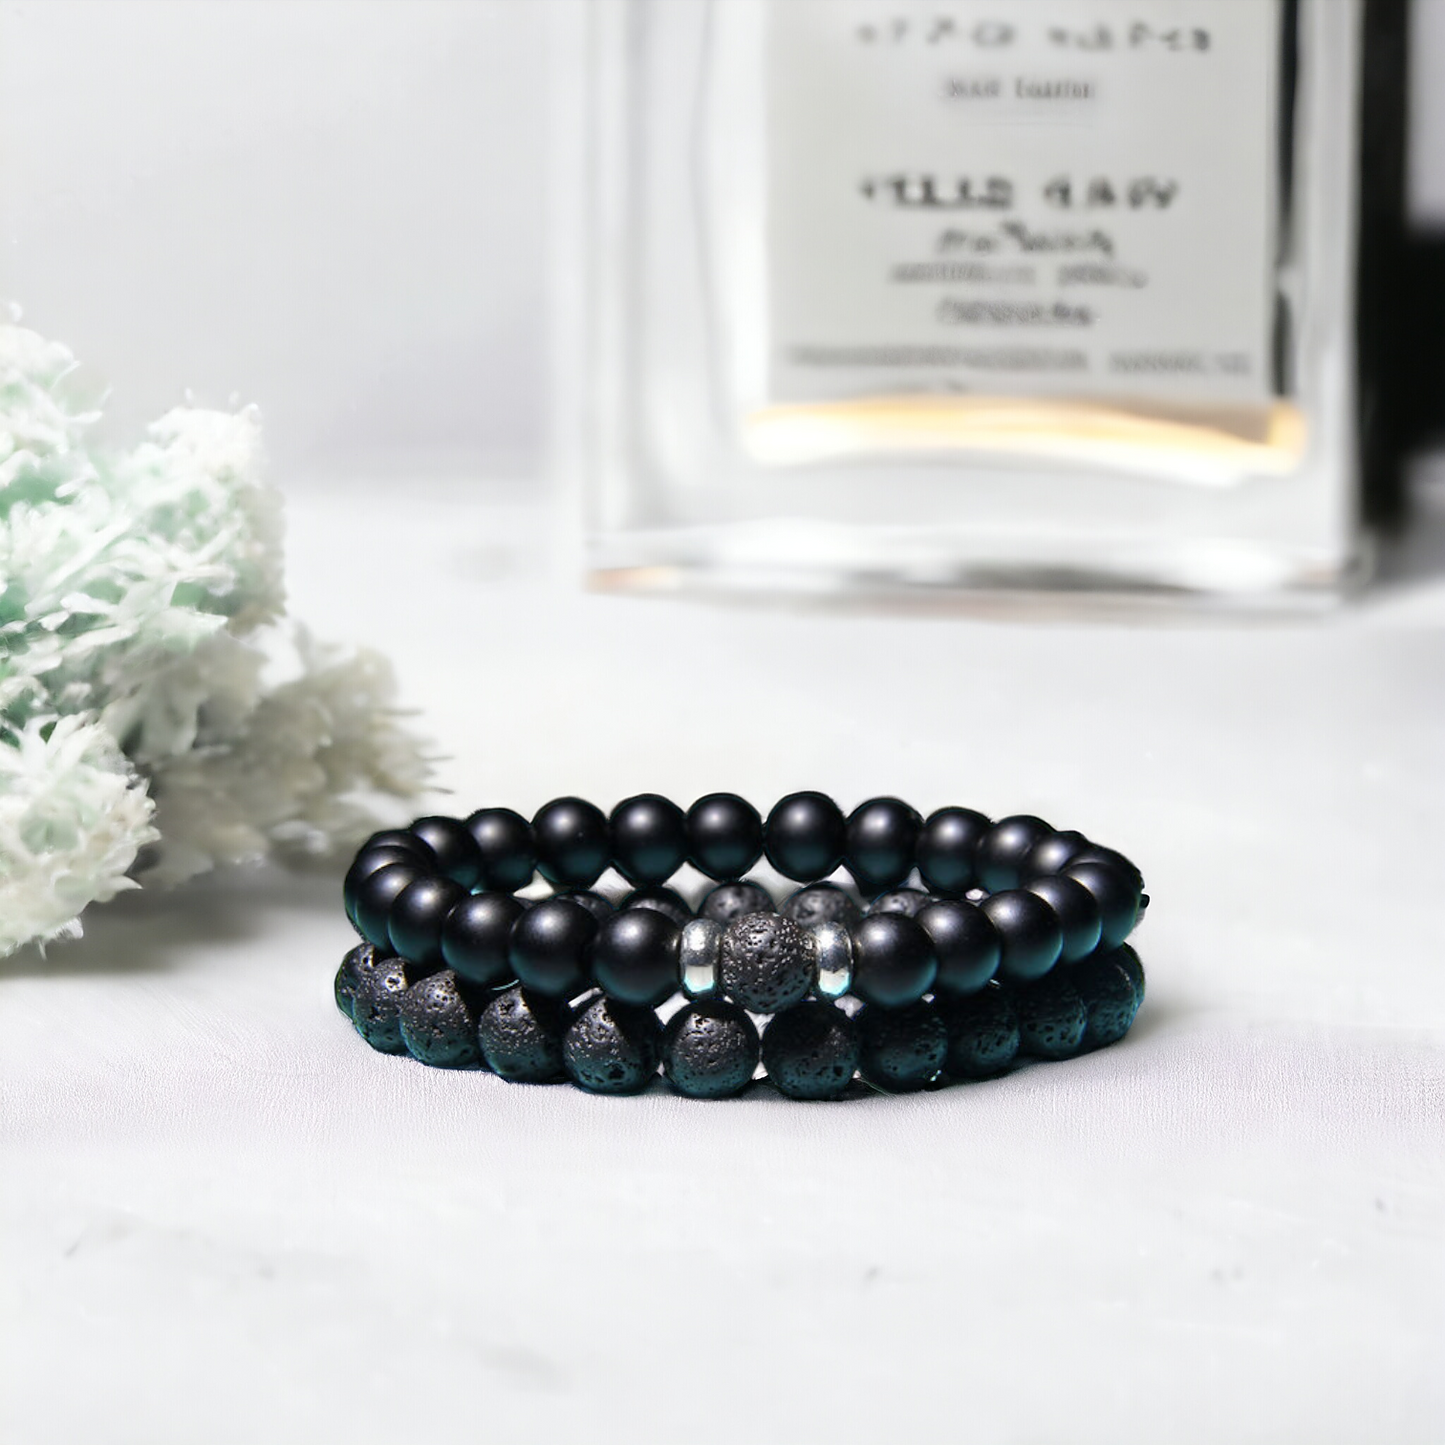 Nudi Point Men's Lava Stone & Black Beads Bracelet Set